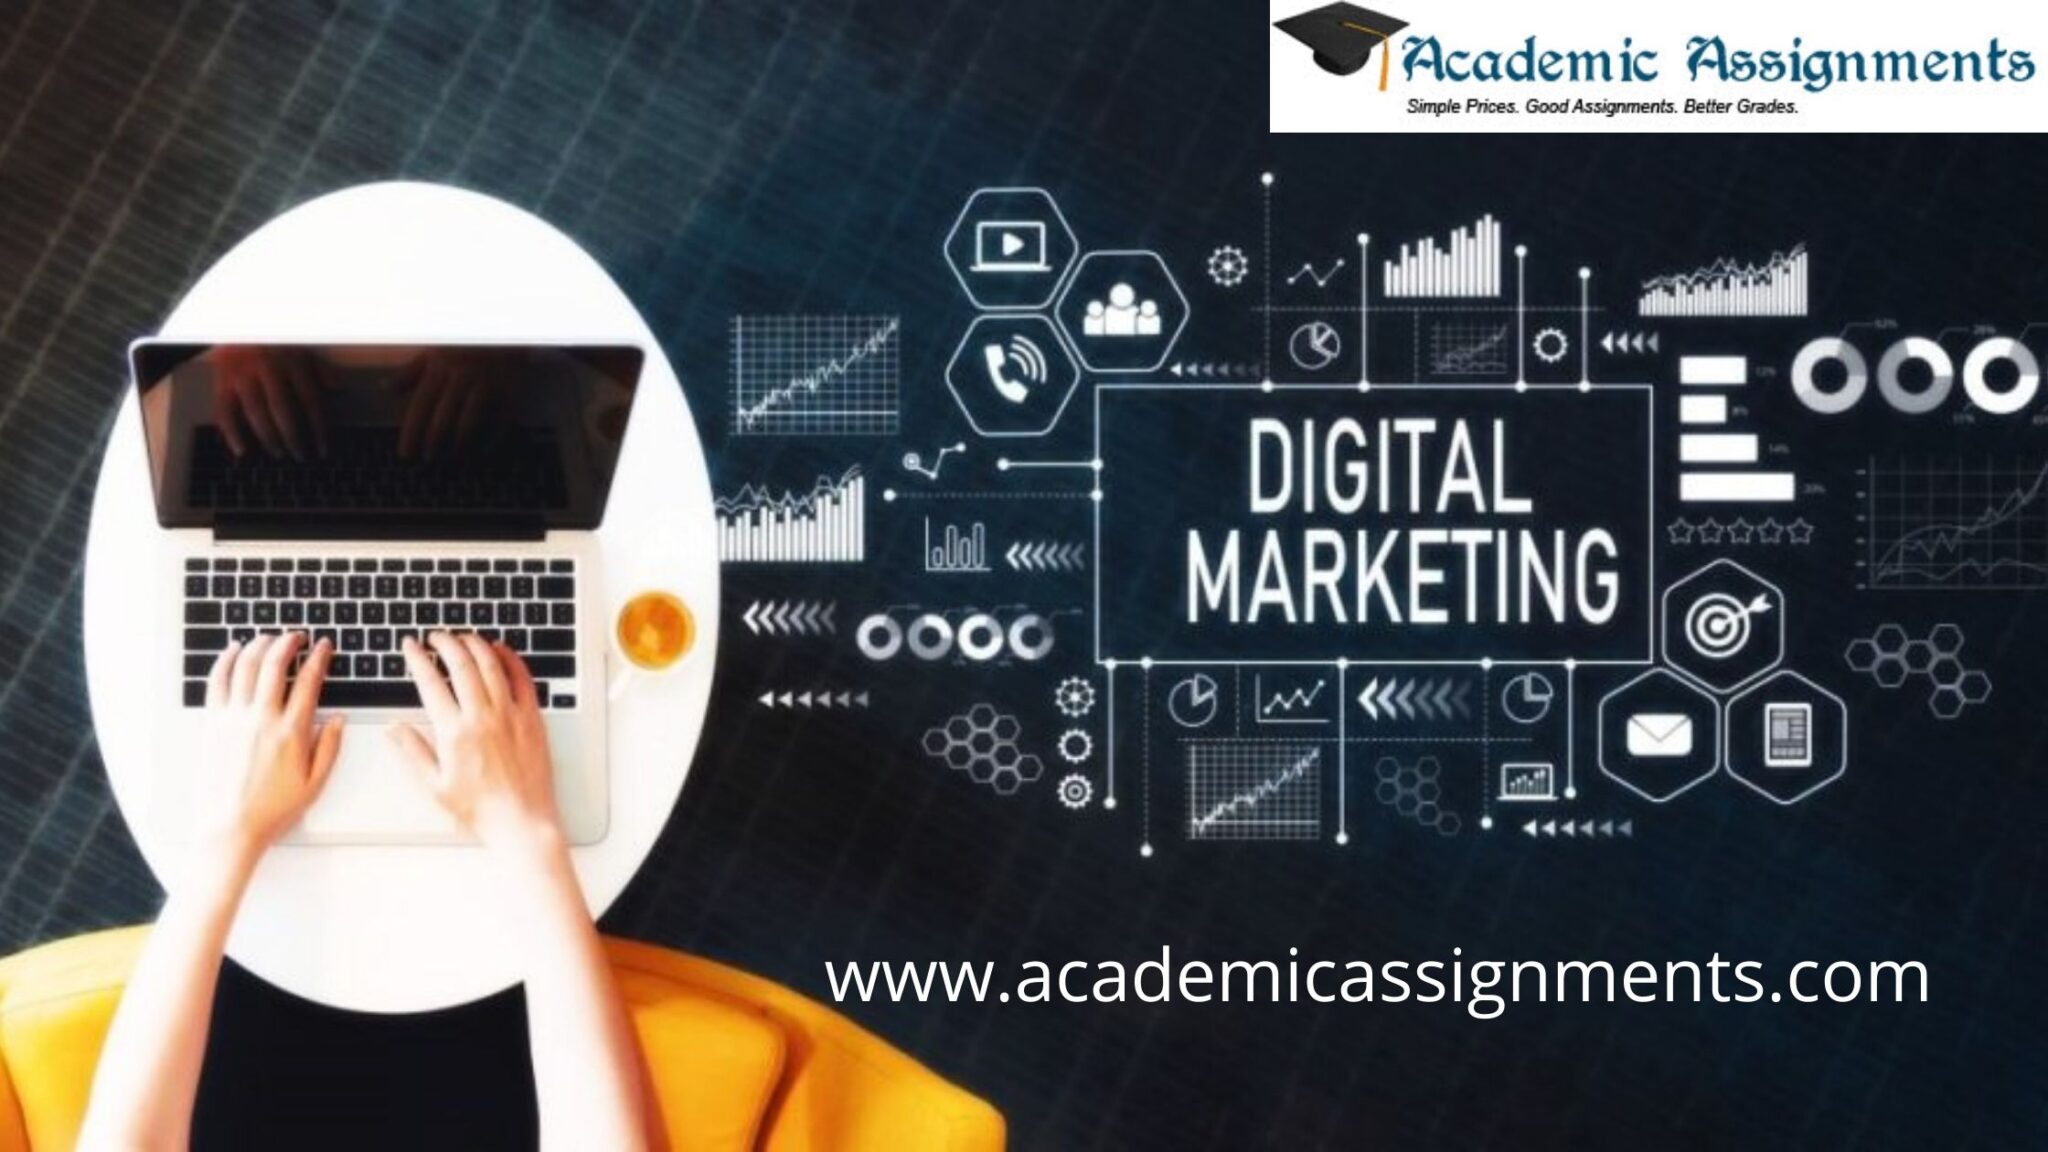 digital marketing assignments